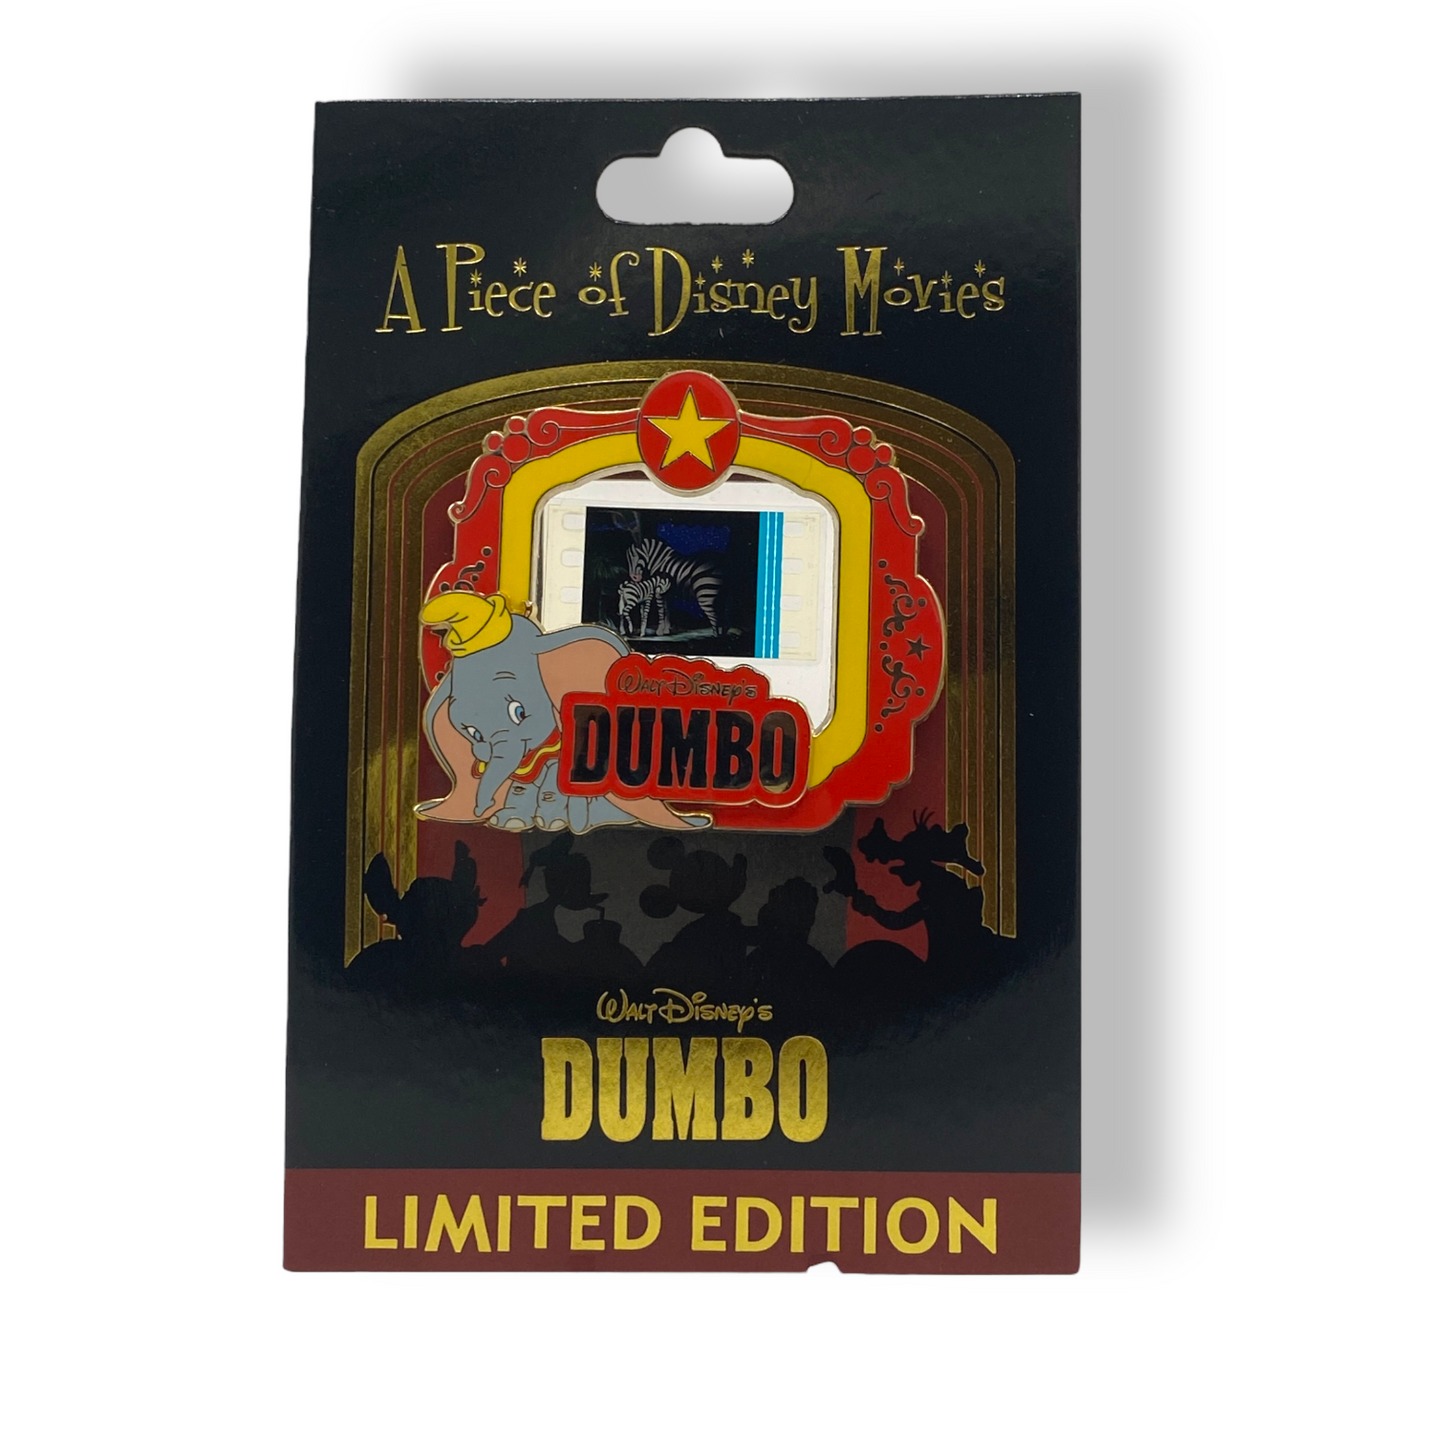 Piece of Disney Movies Dumbo Pin